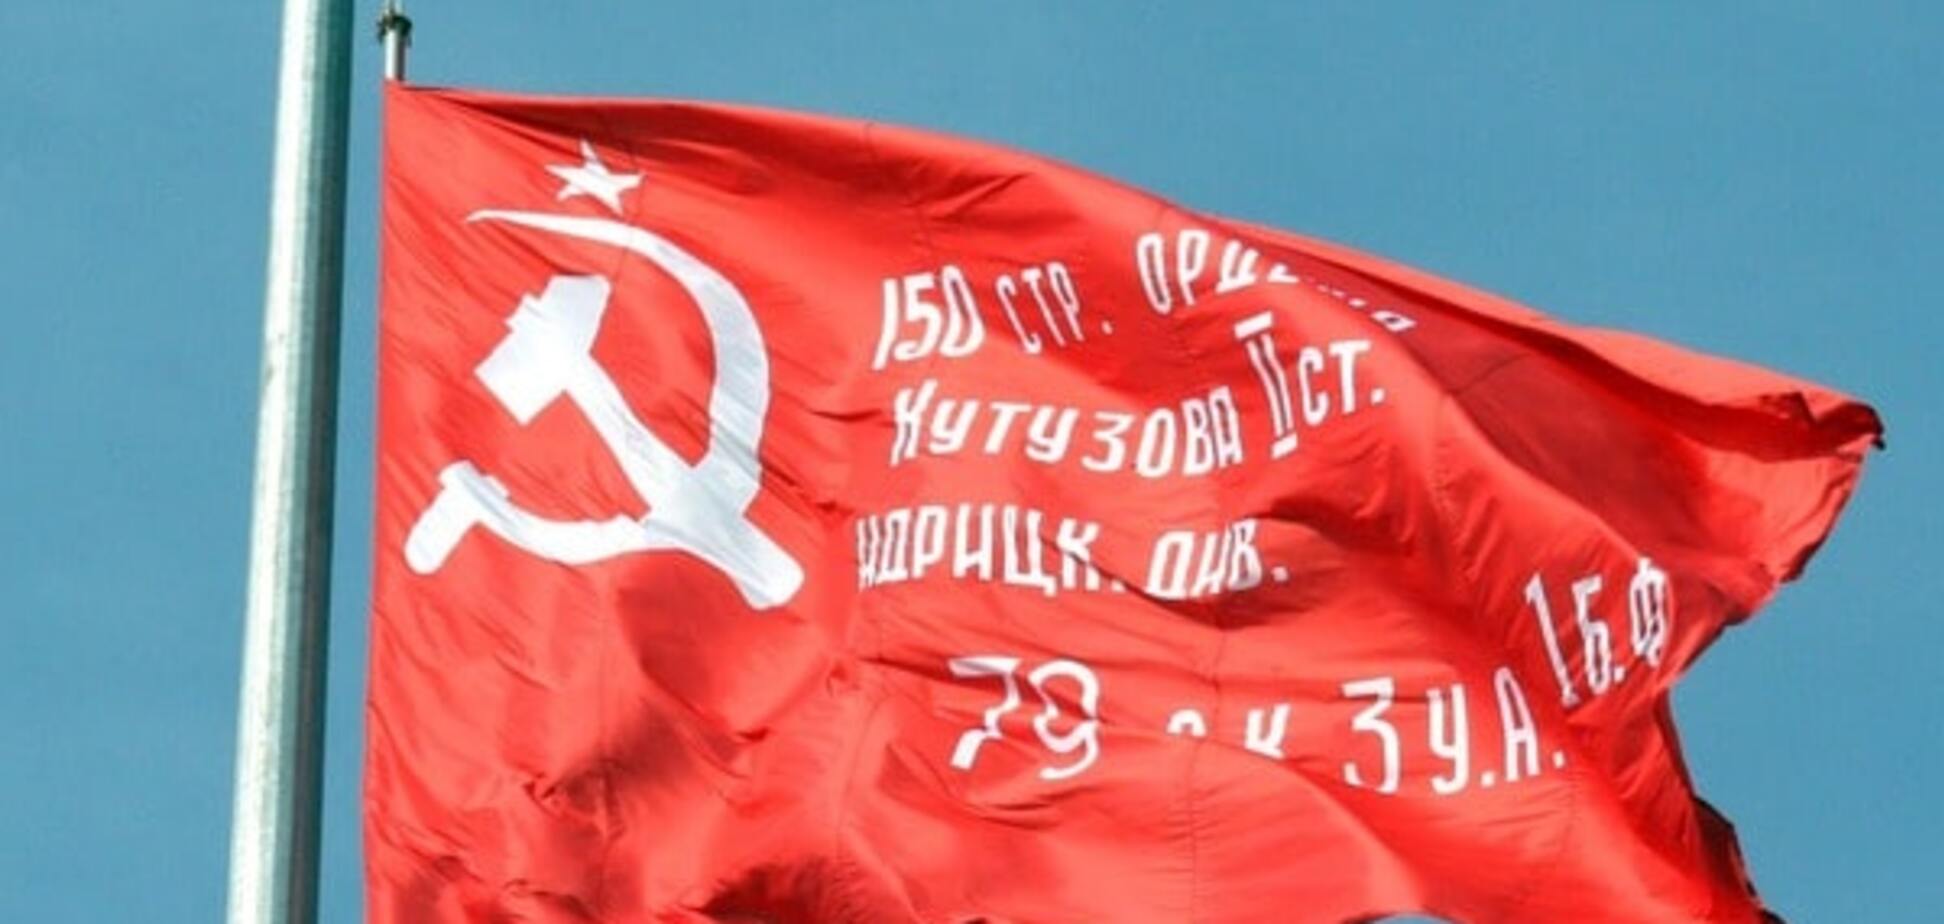 Знамя Победы